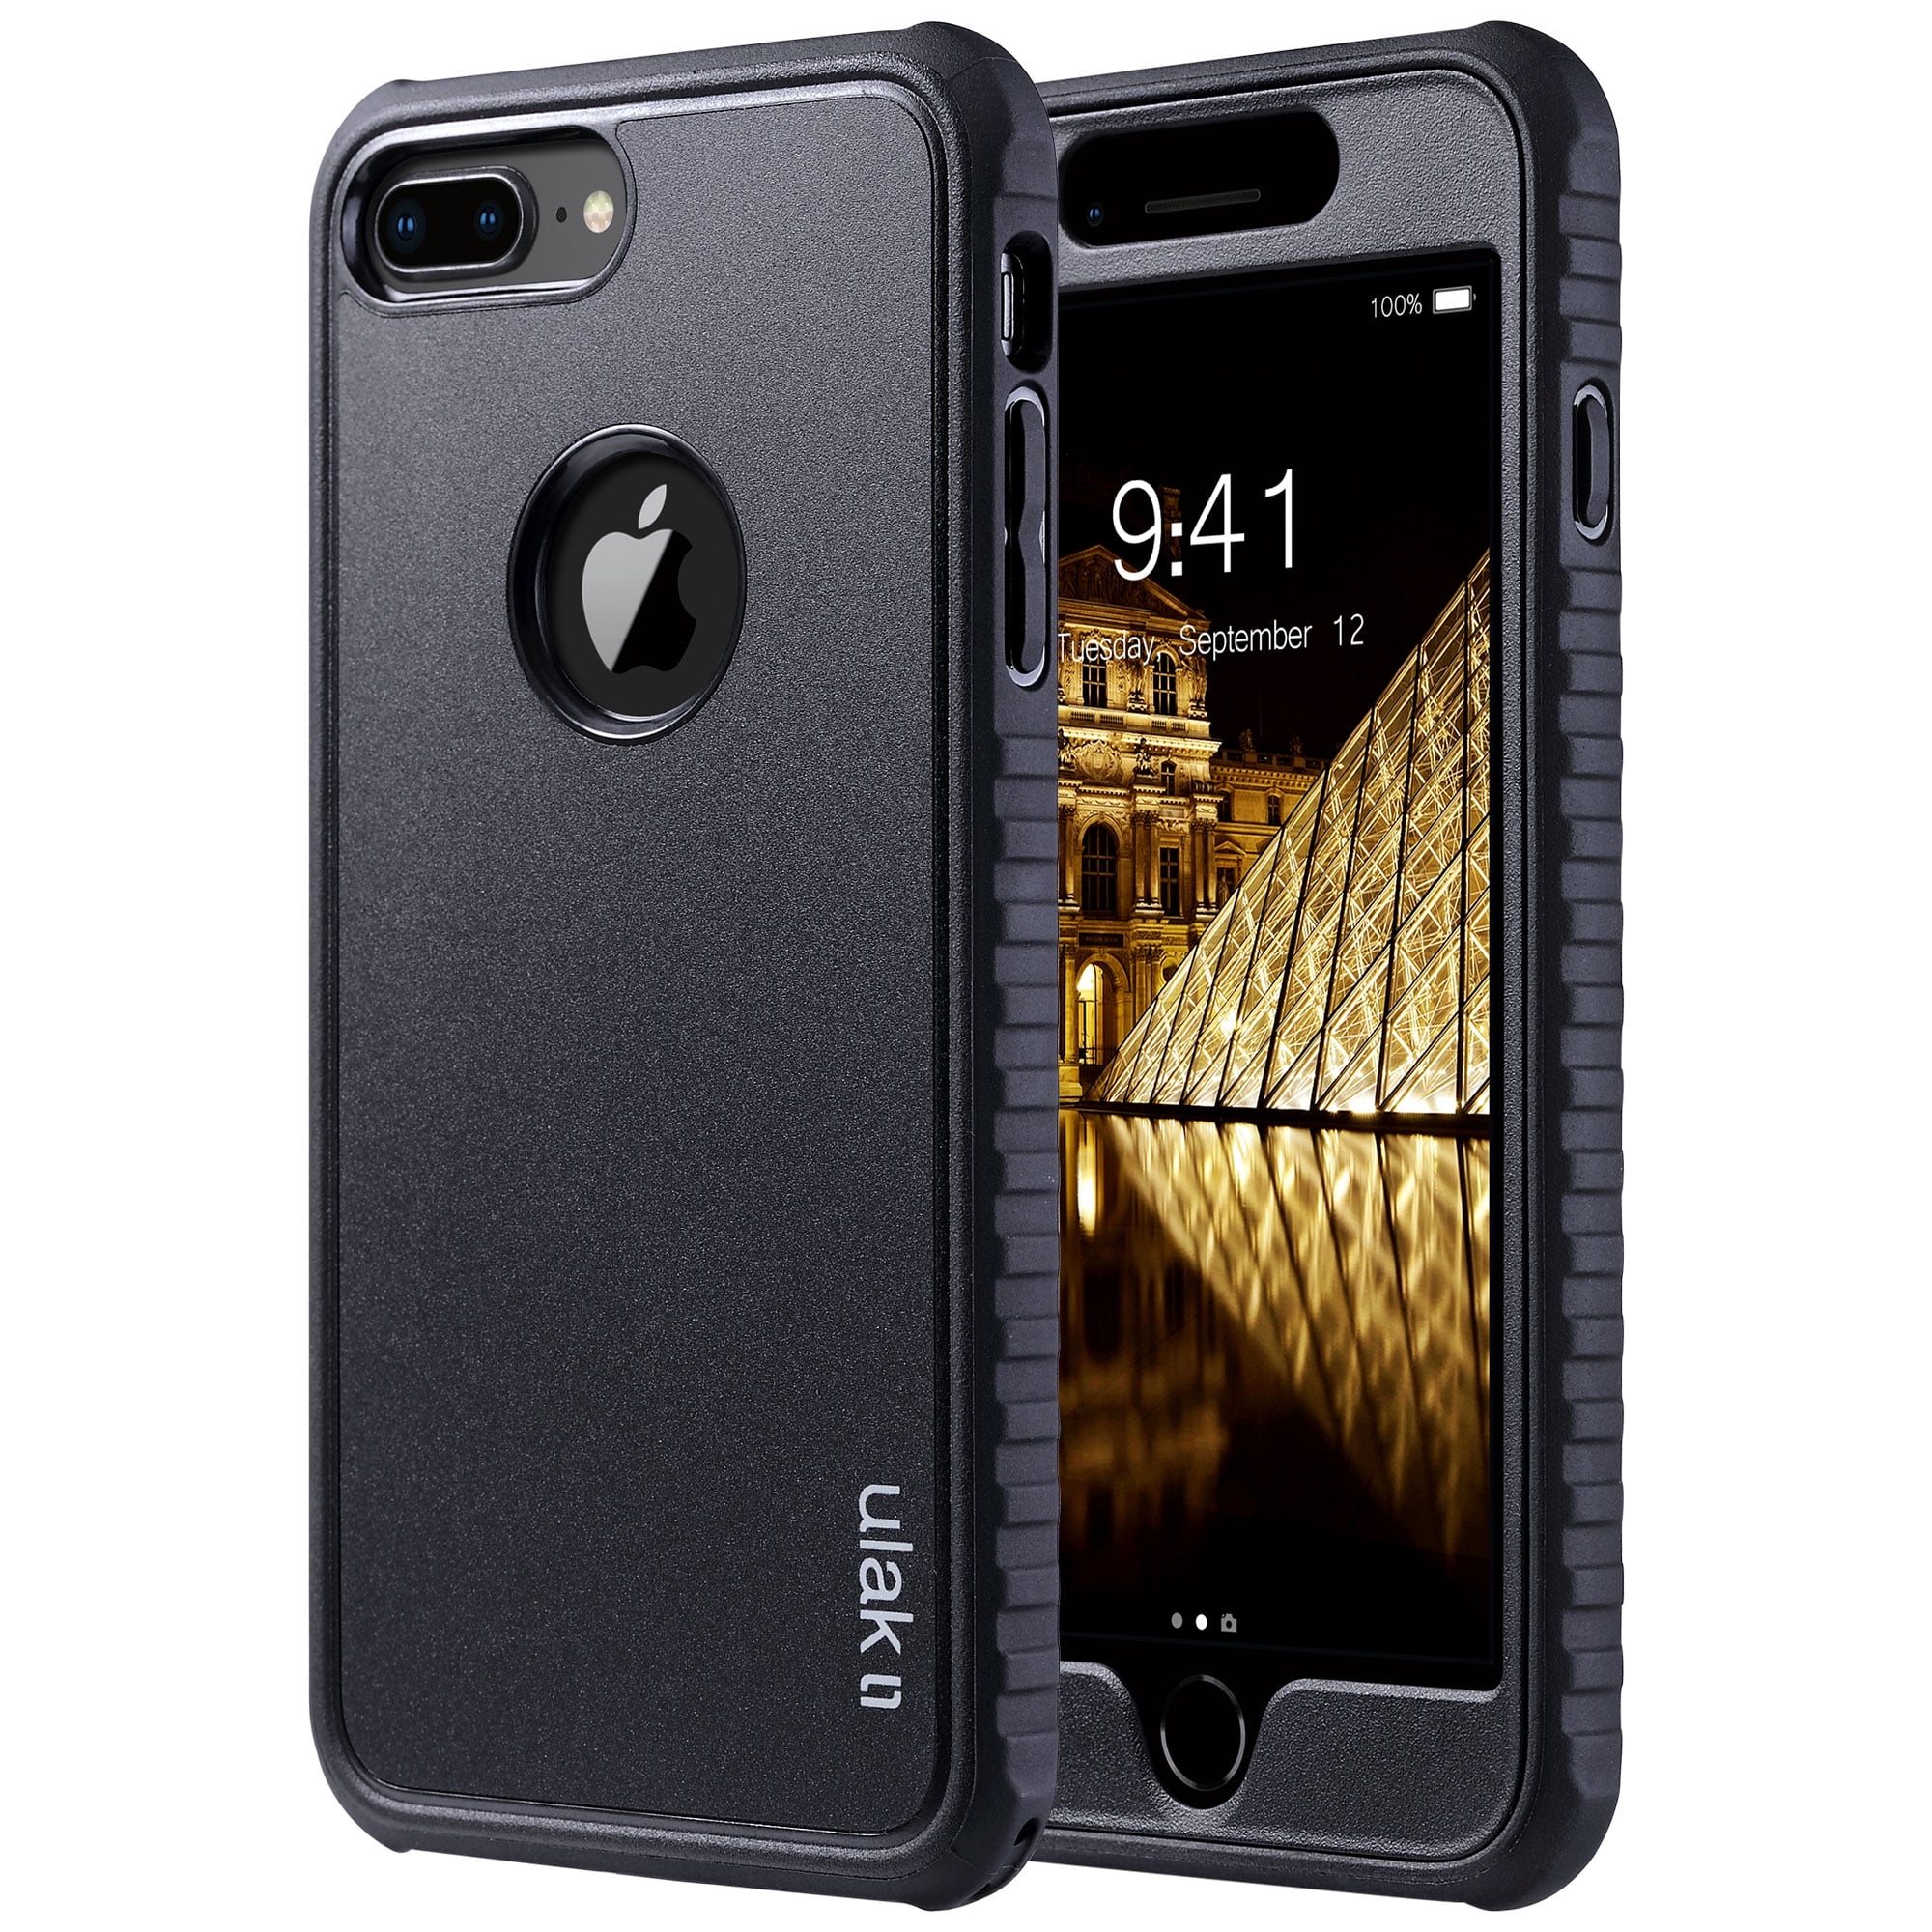 iPhone 8 Plus Case, ULAK Stylish Black Slim Fit Heavy Duty Shockproof